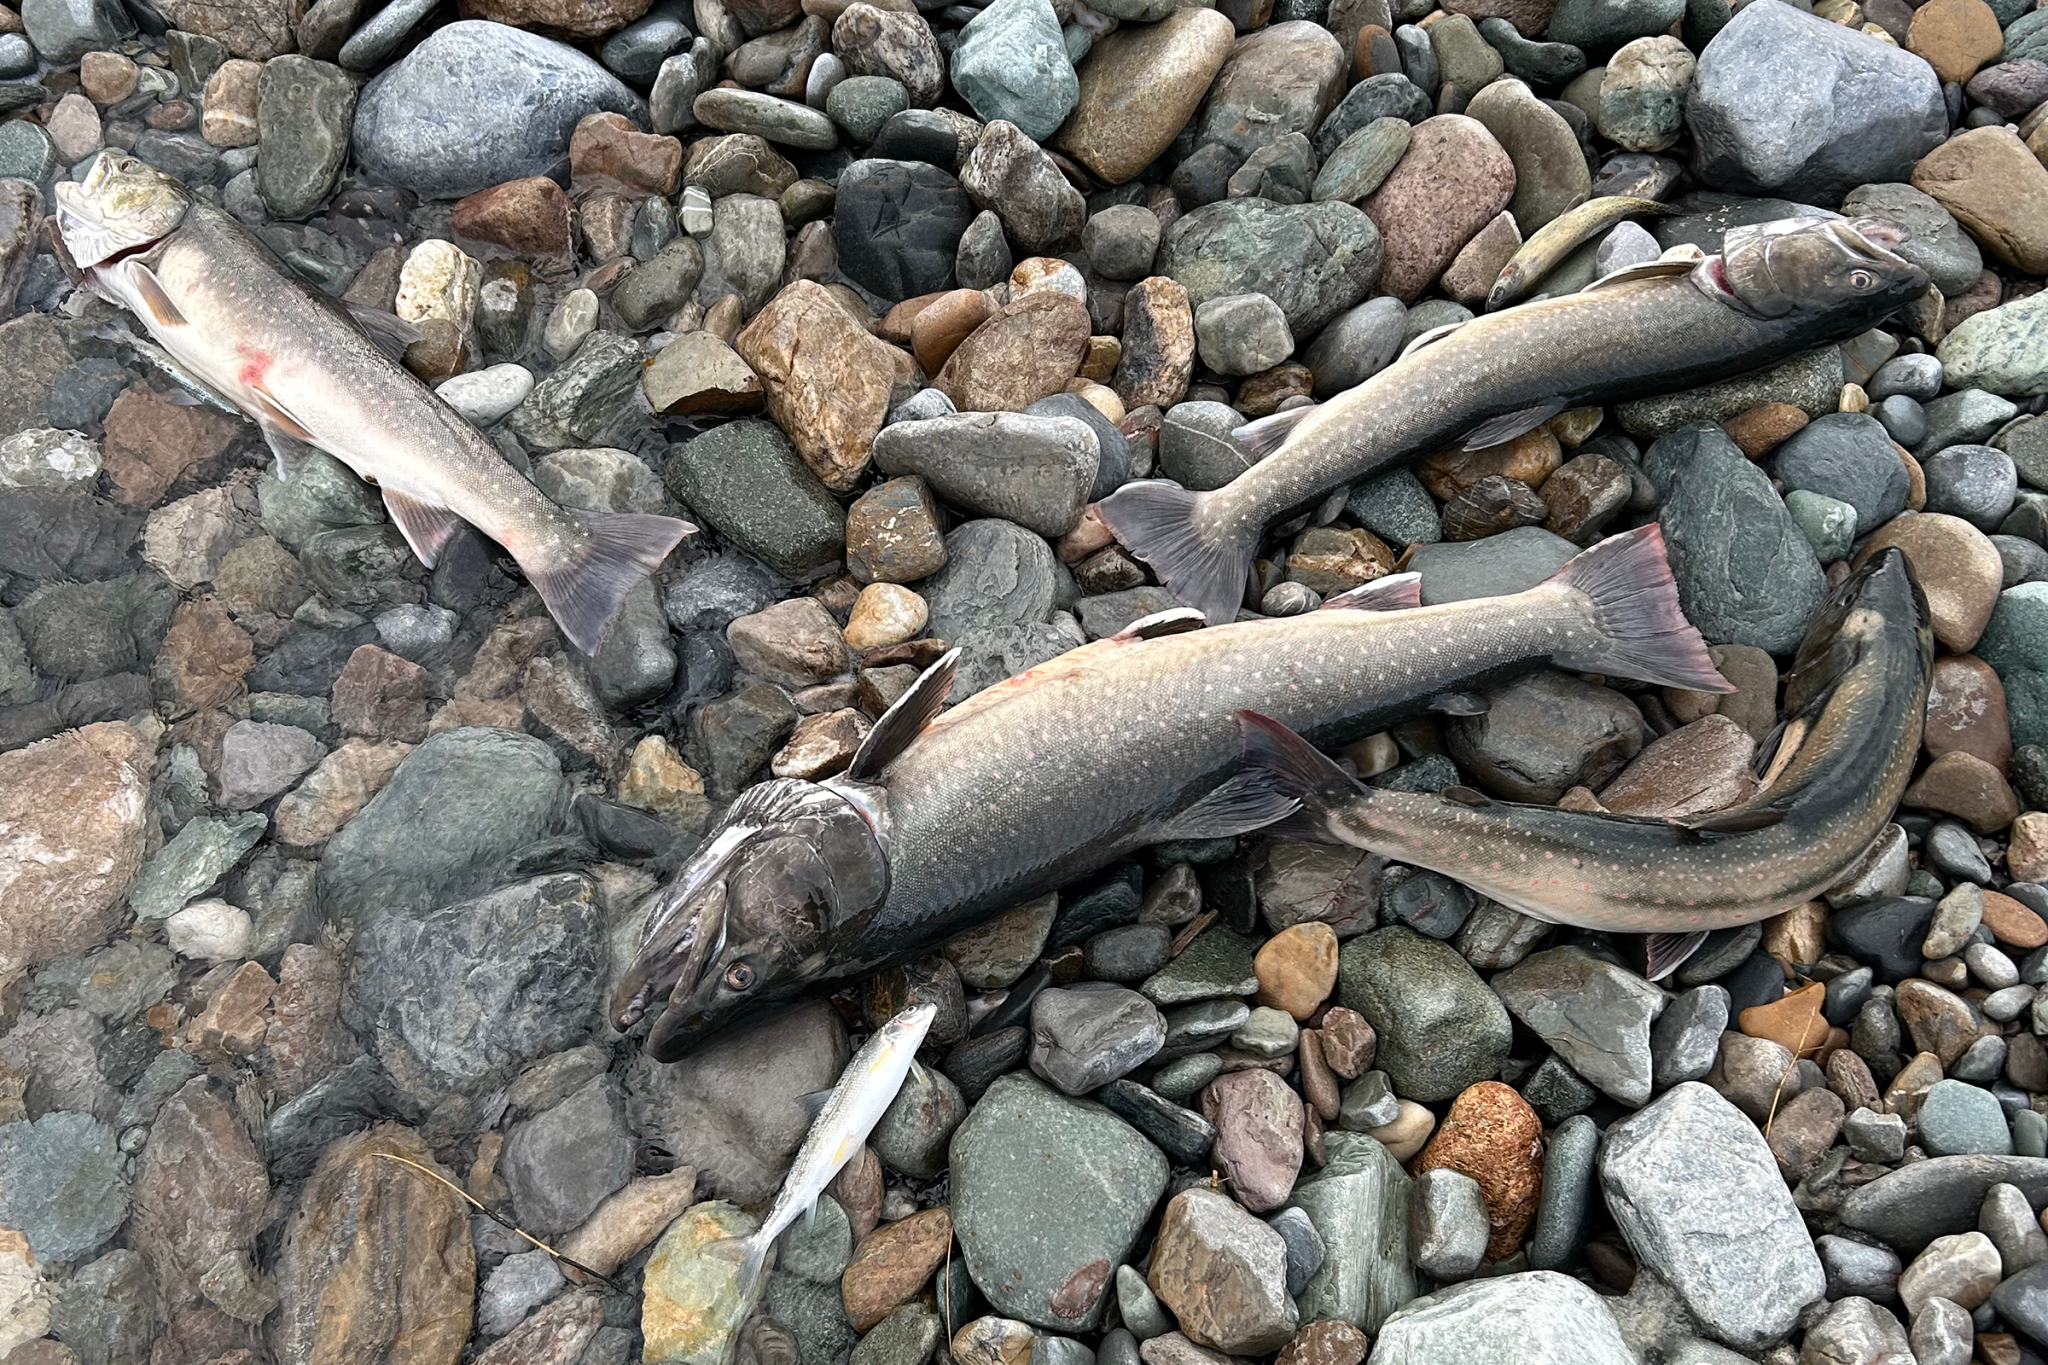 Anglers and River Guardians help Kootenay fish cross rivers